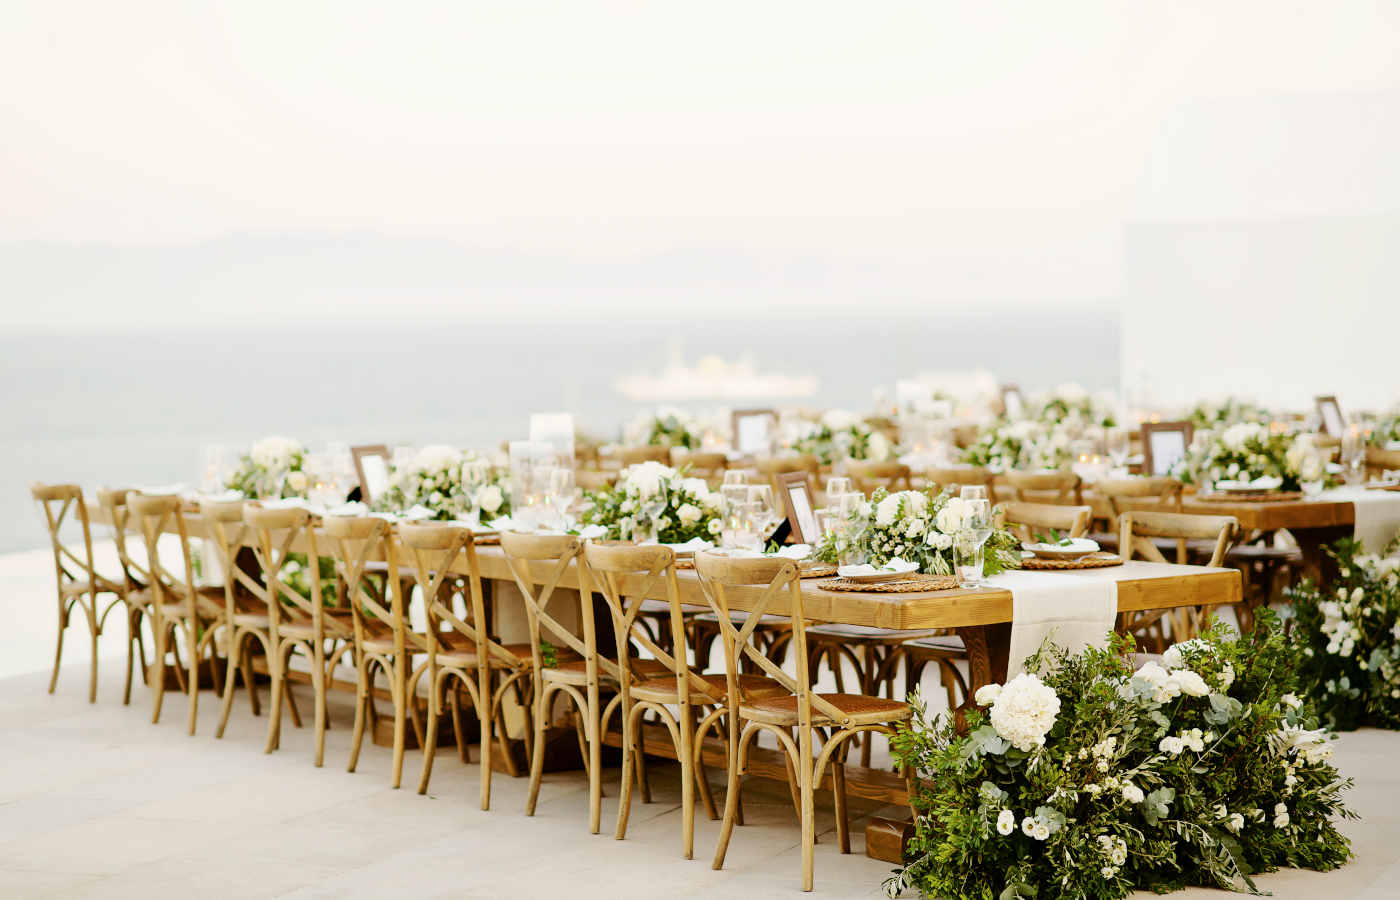 Scenic Mykonos wedding reception with stunning white and green floral arrangements, Mykonos wedding dinner set up and design